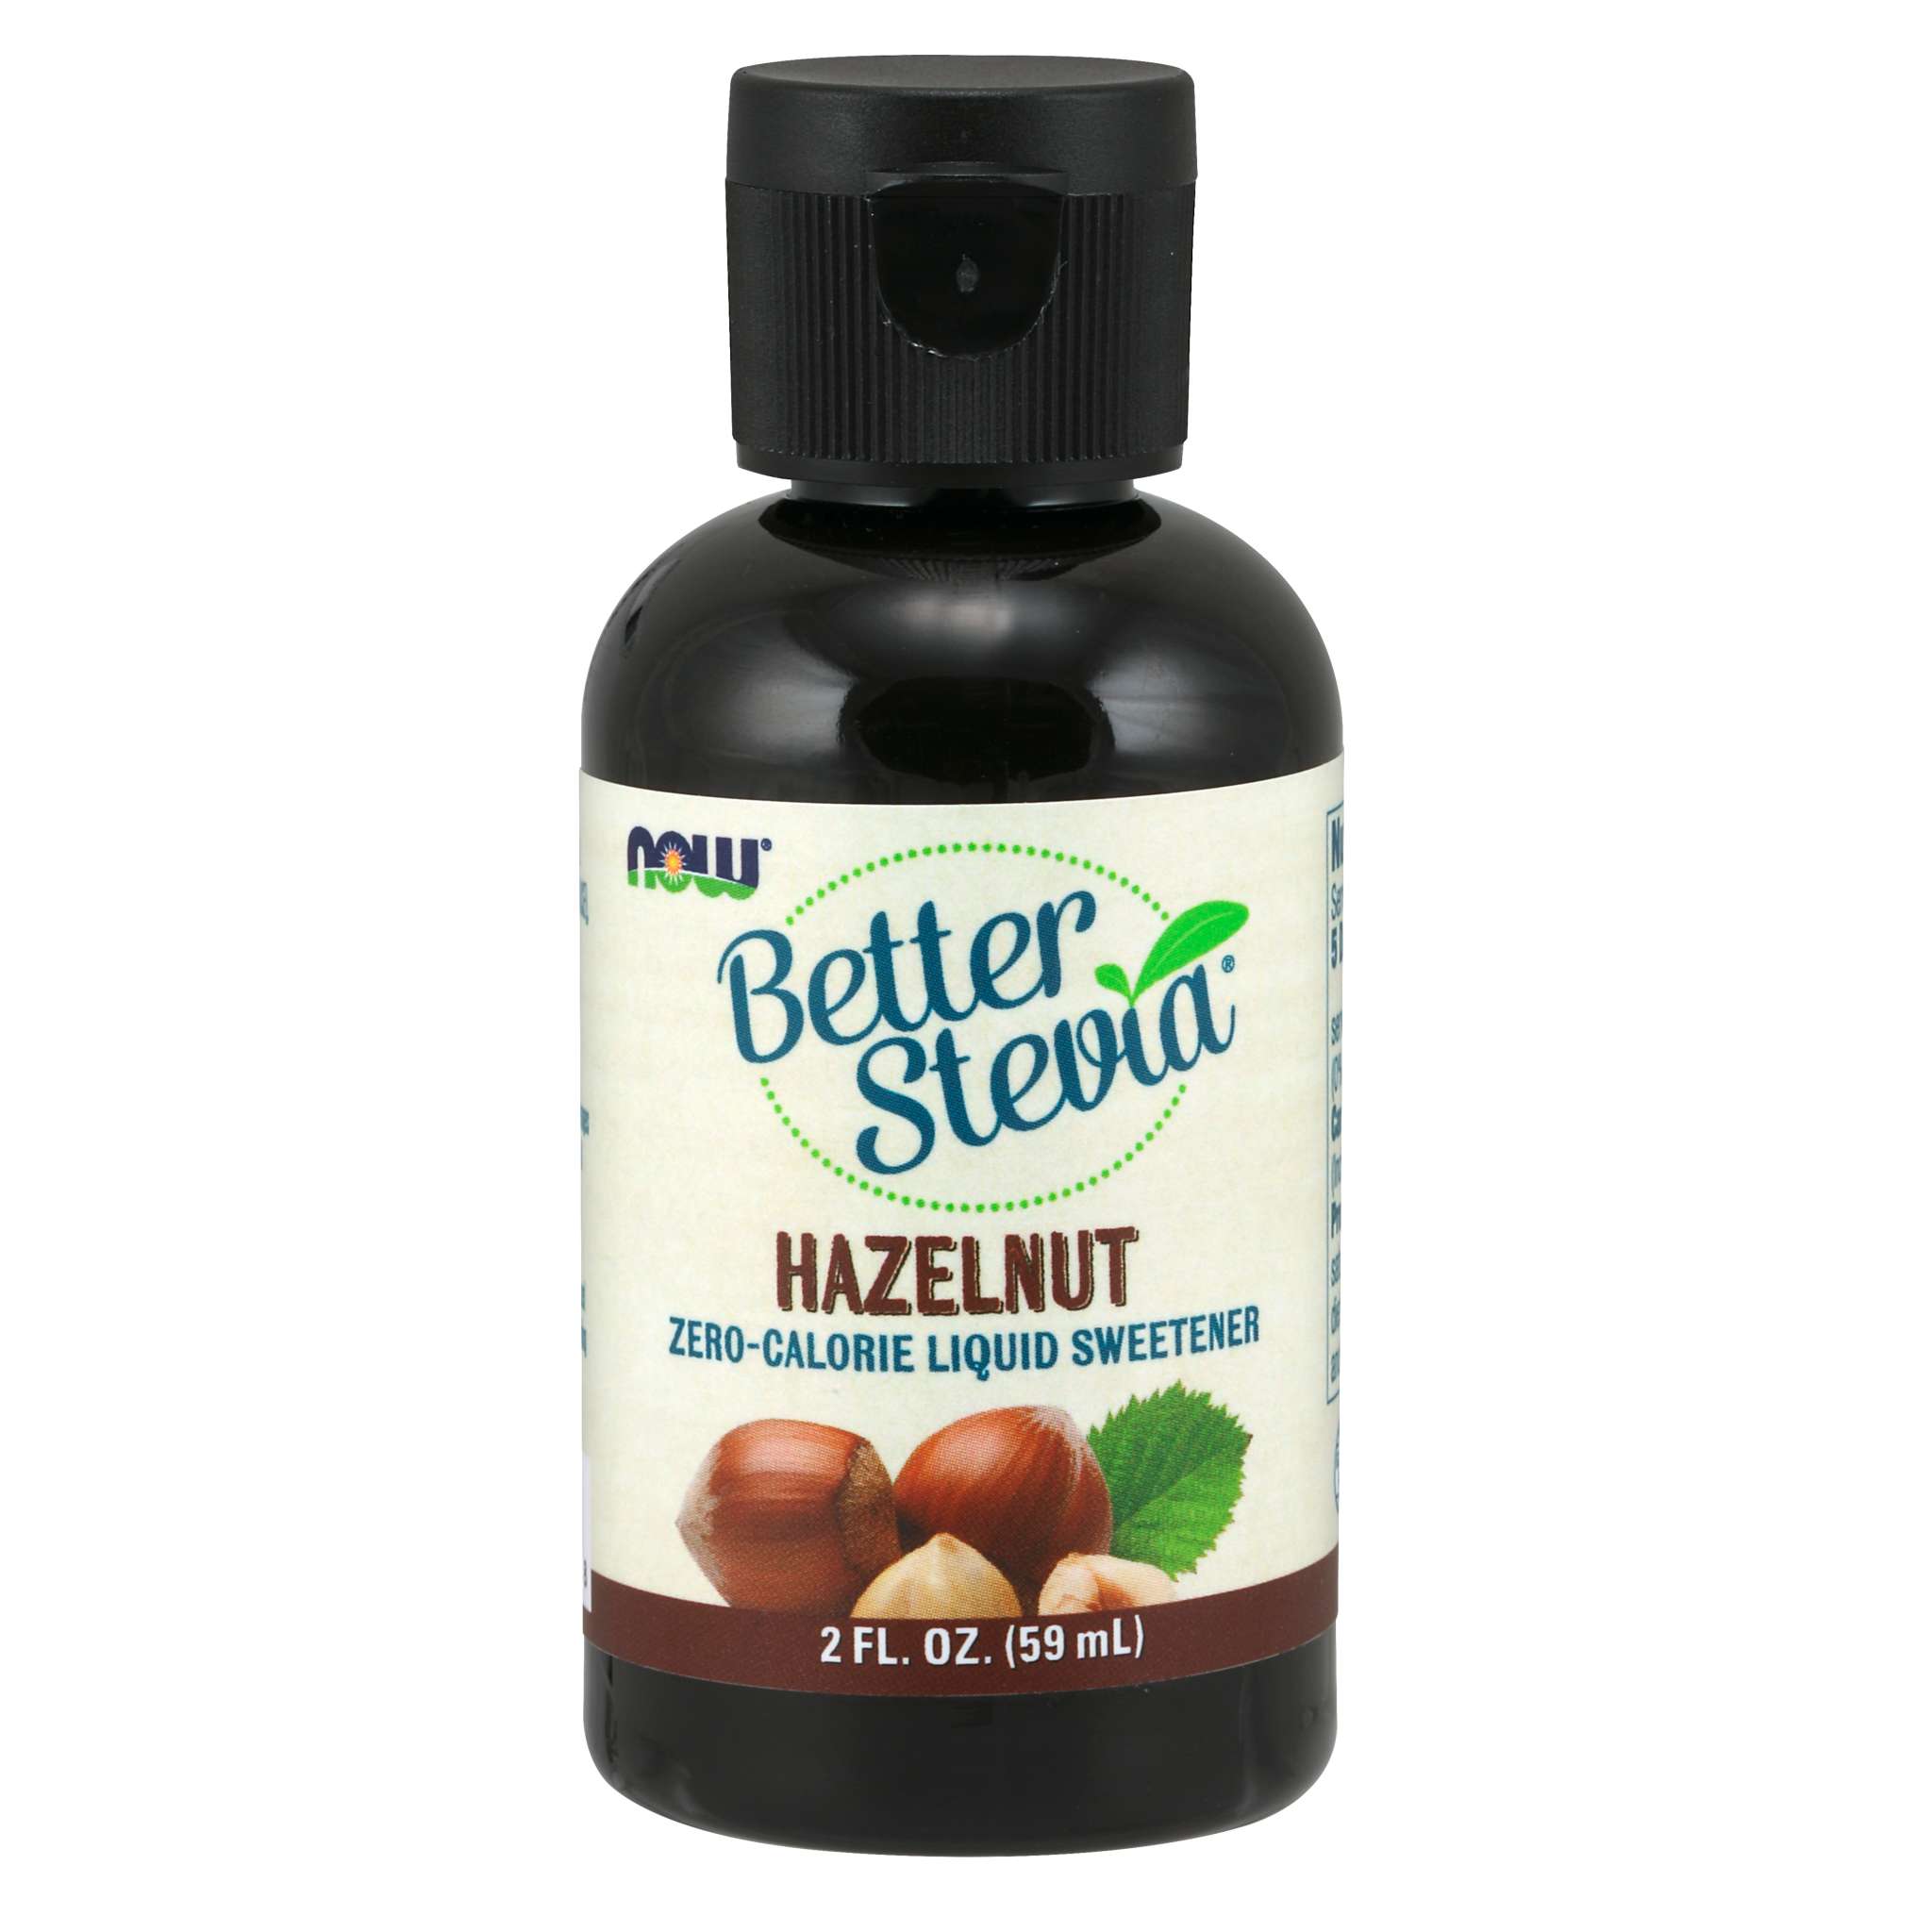 Now Foods - Stevia Better liq Hazelnut